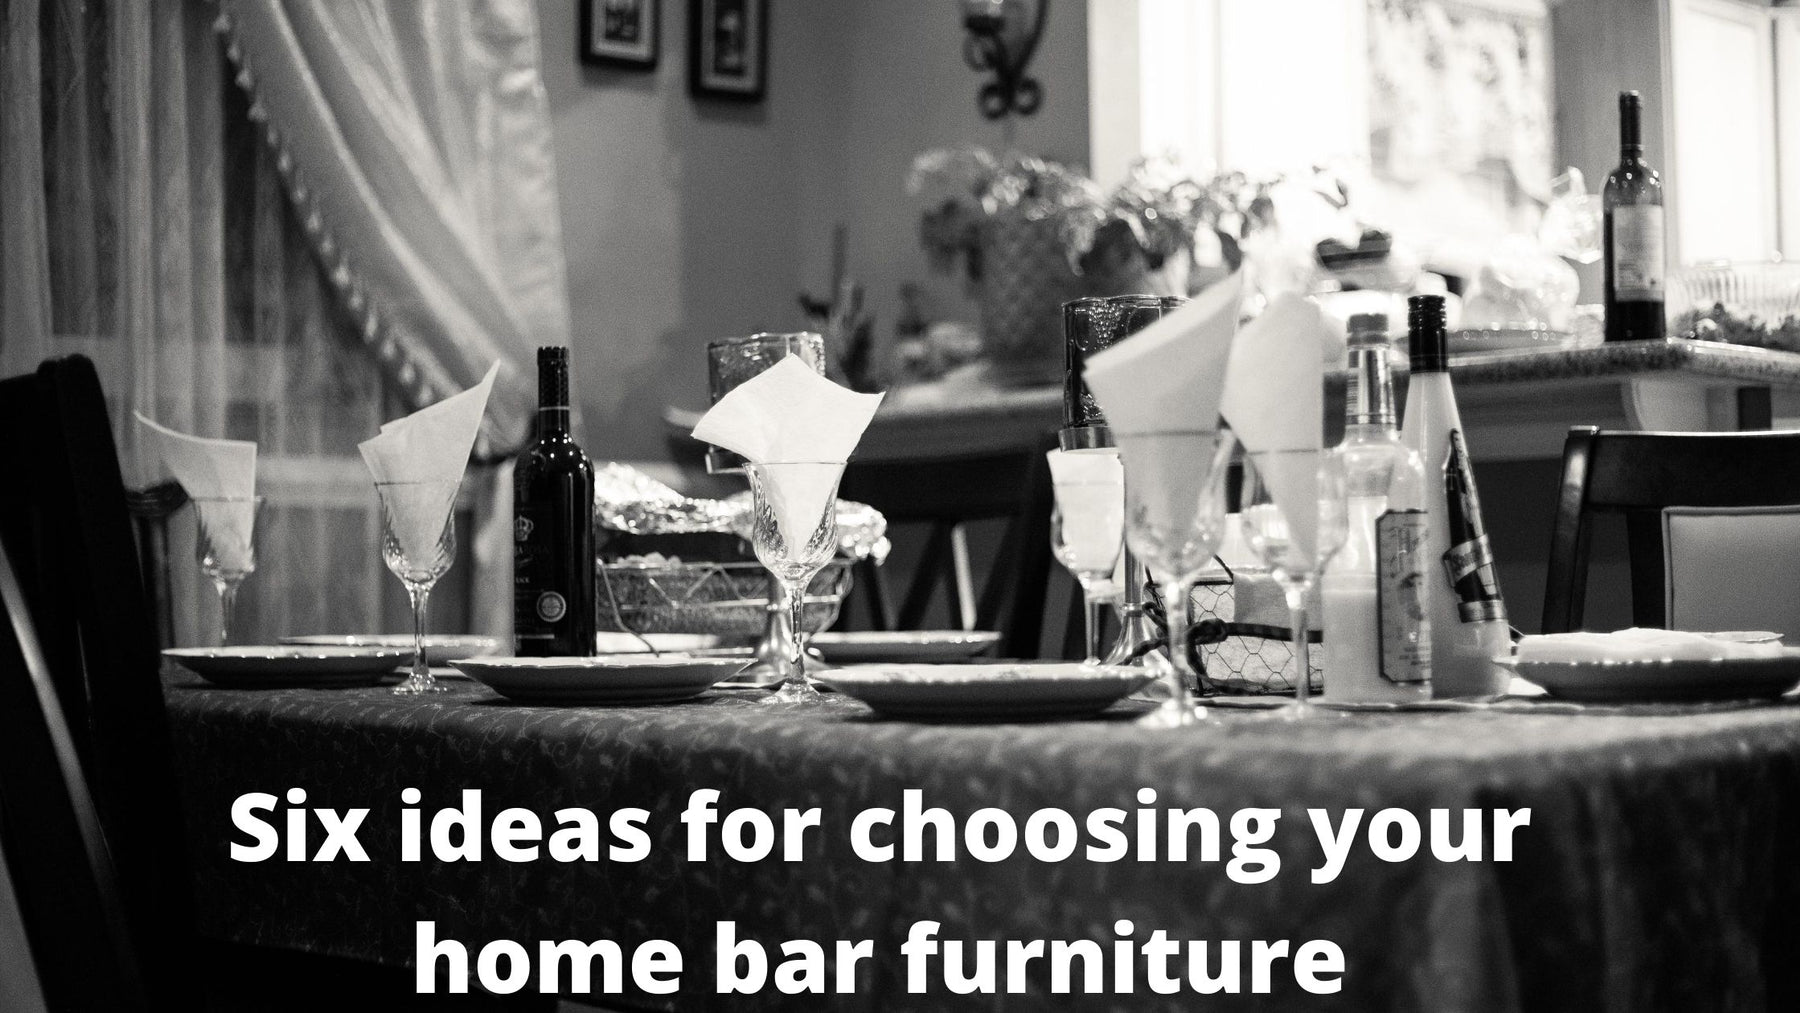 Home bar furniture